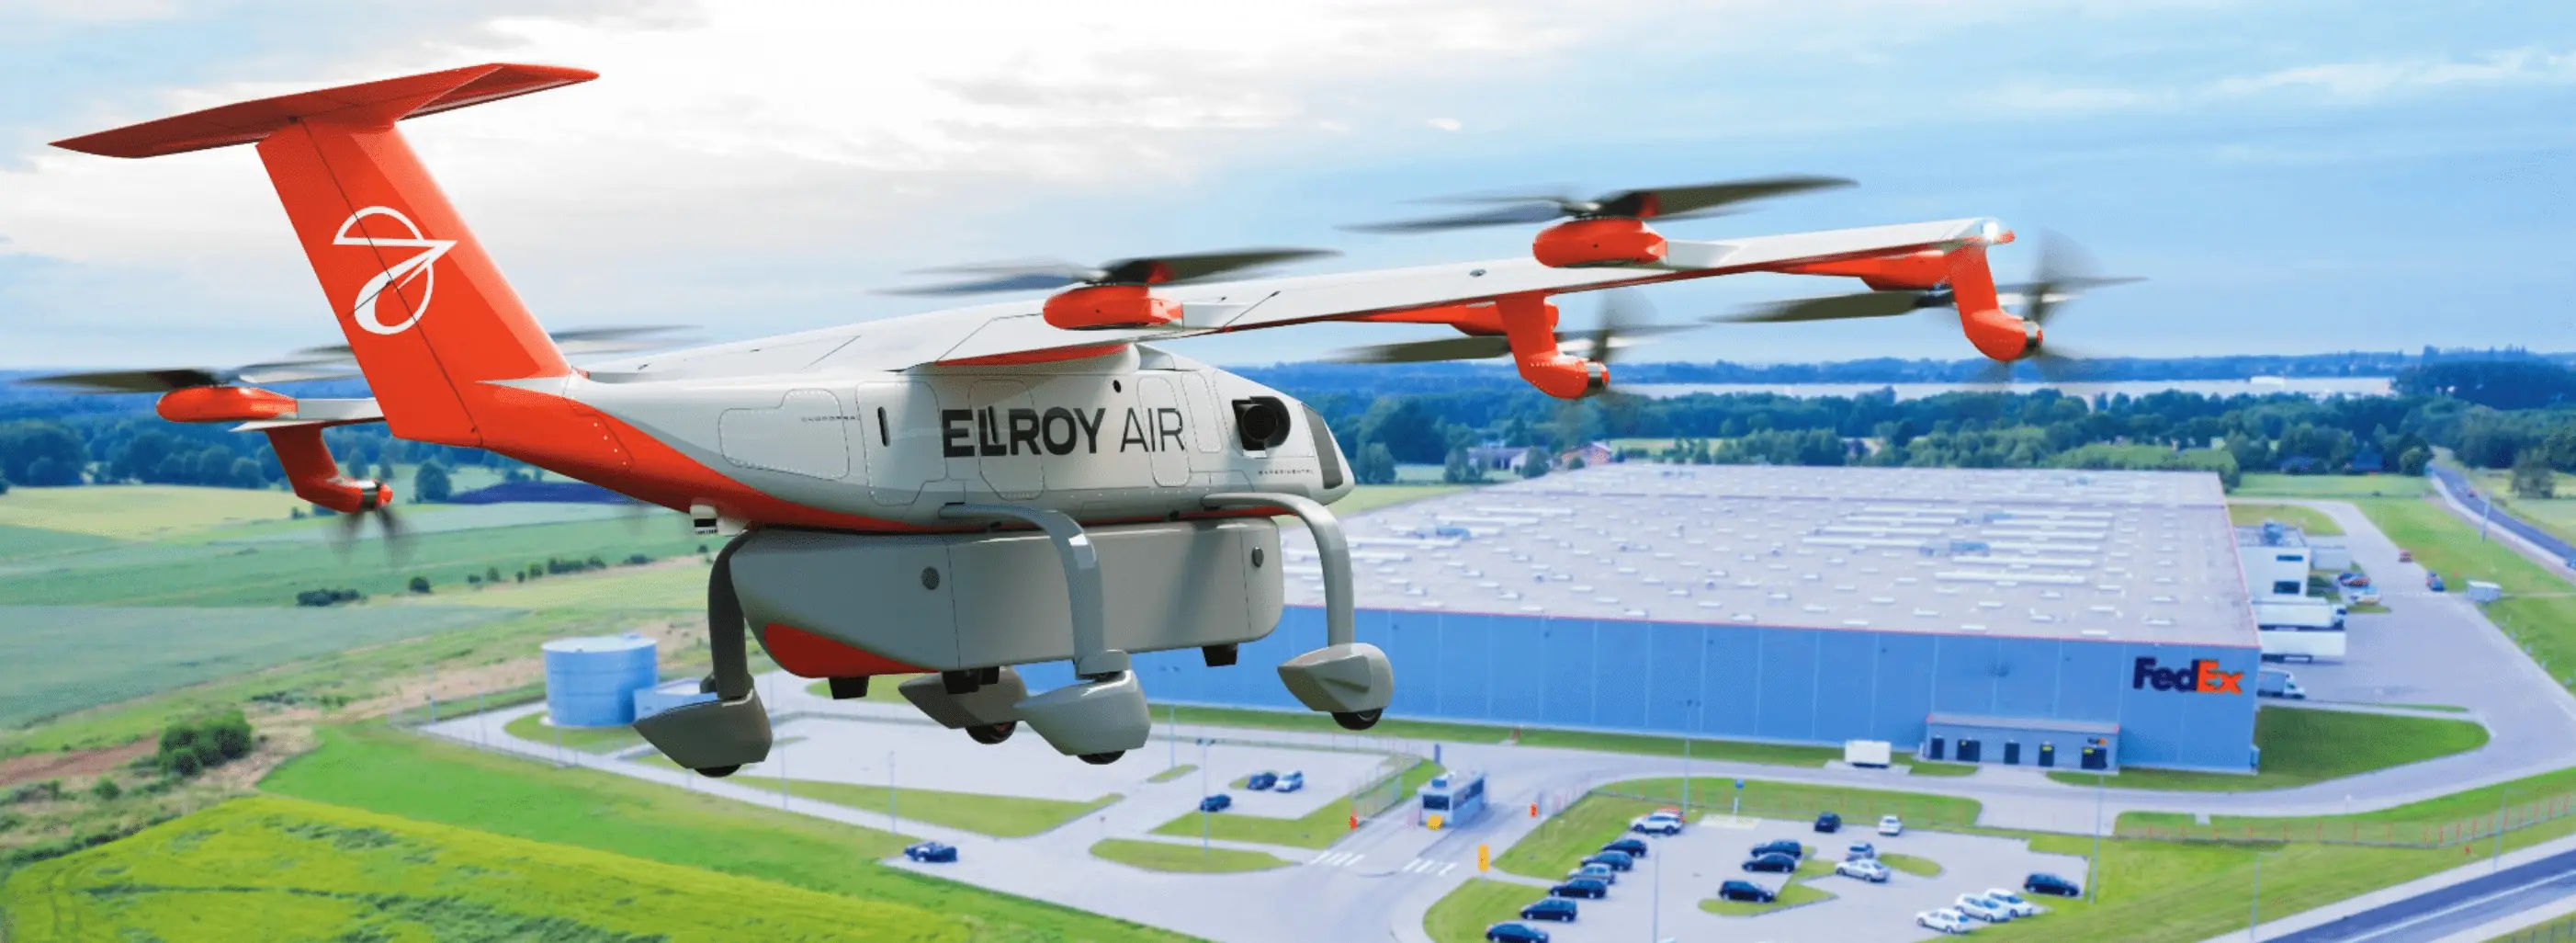 Droni Elroy Air trasportano merci